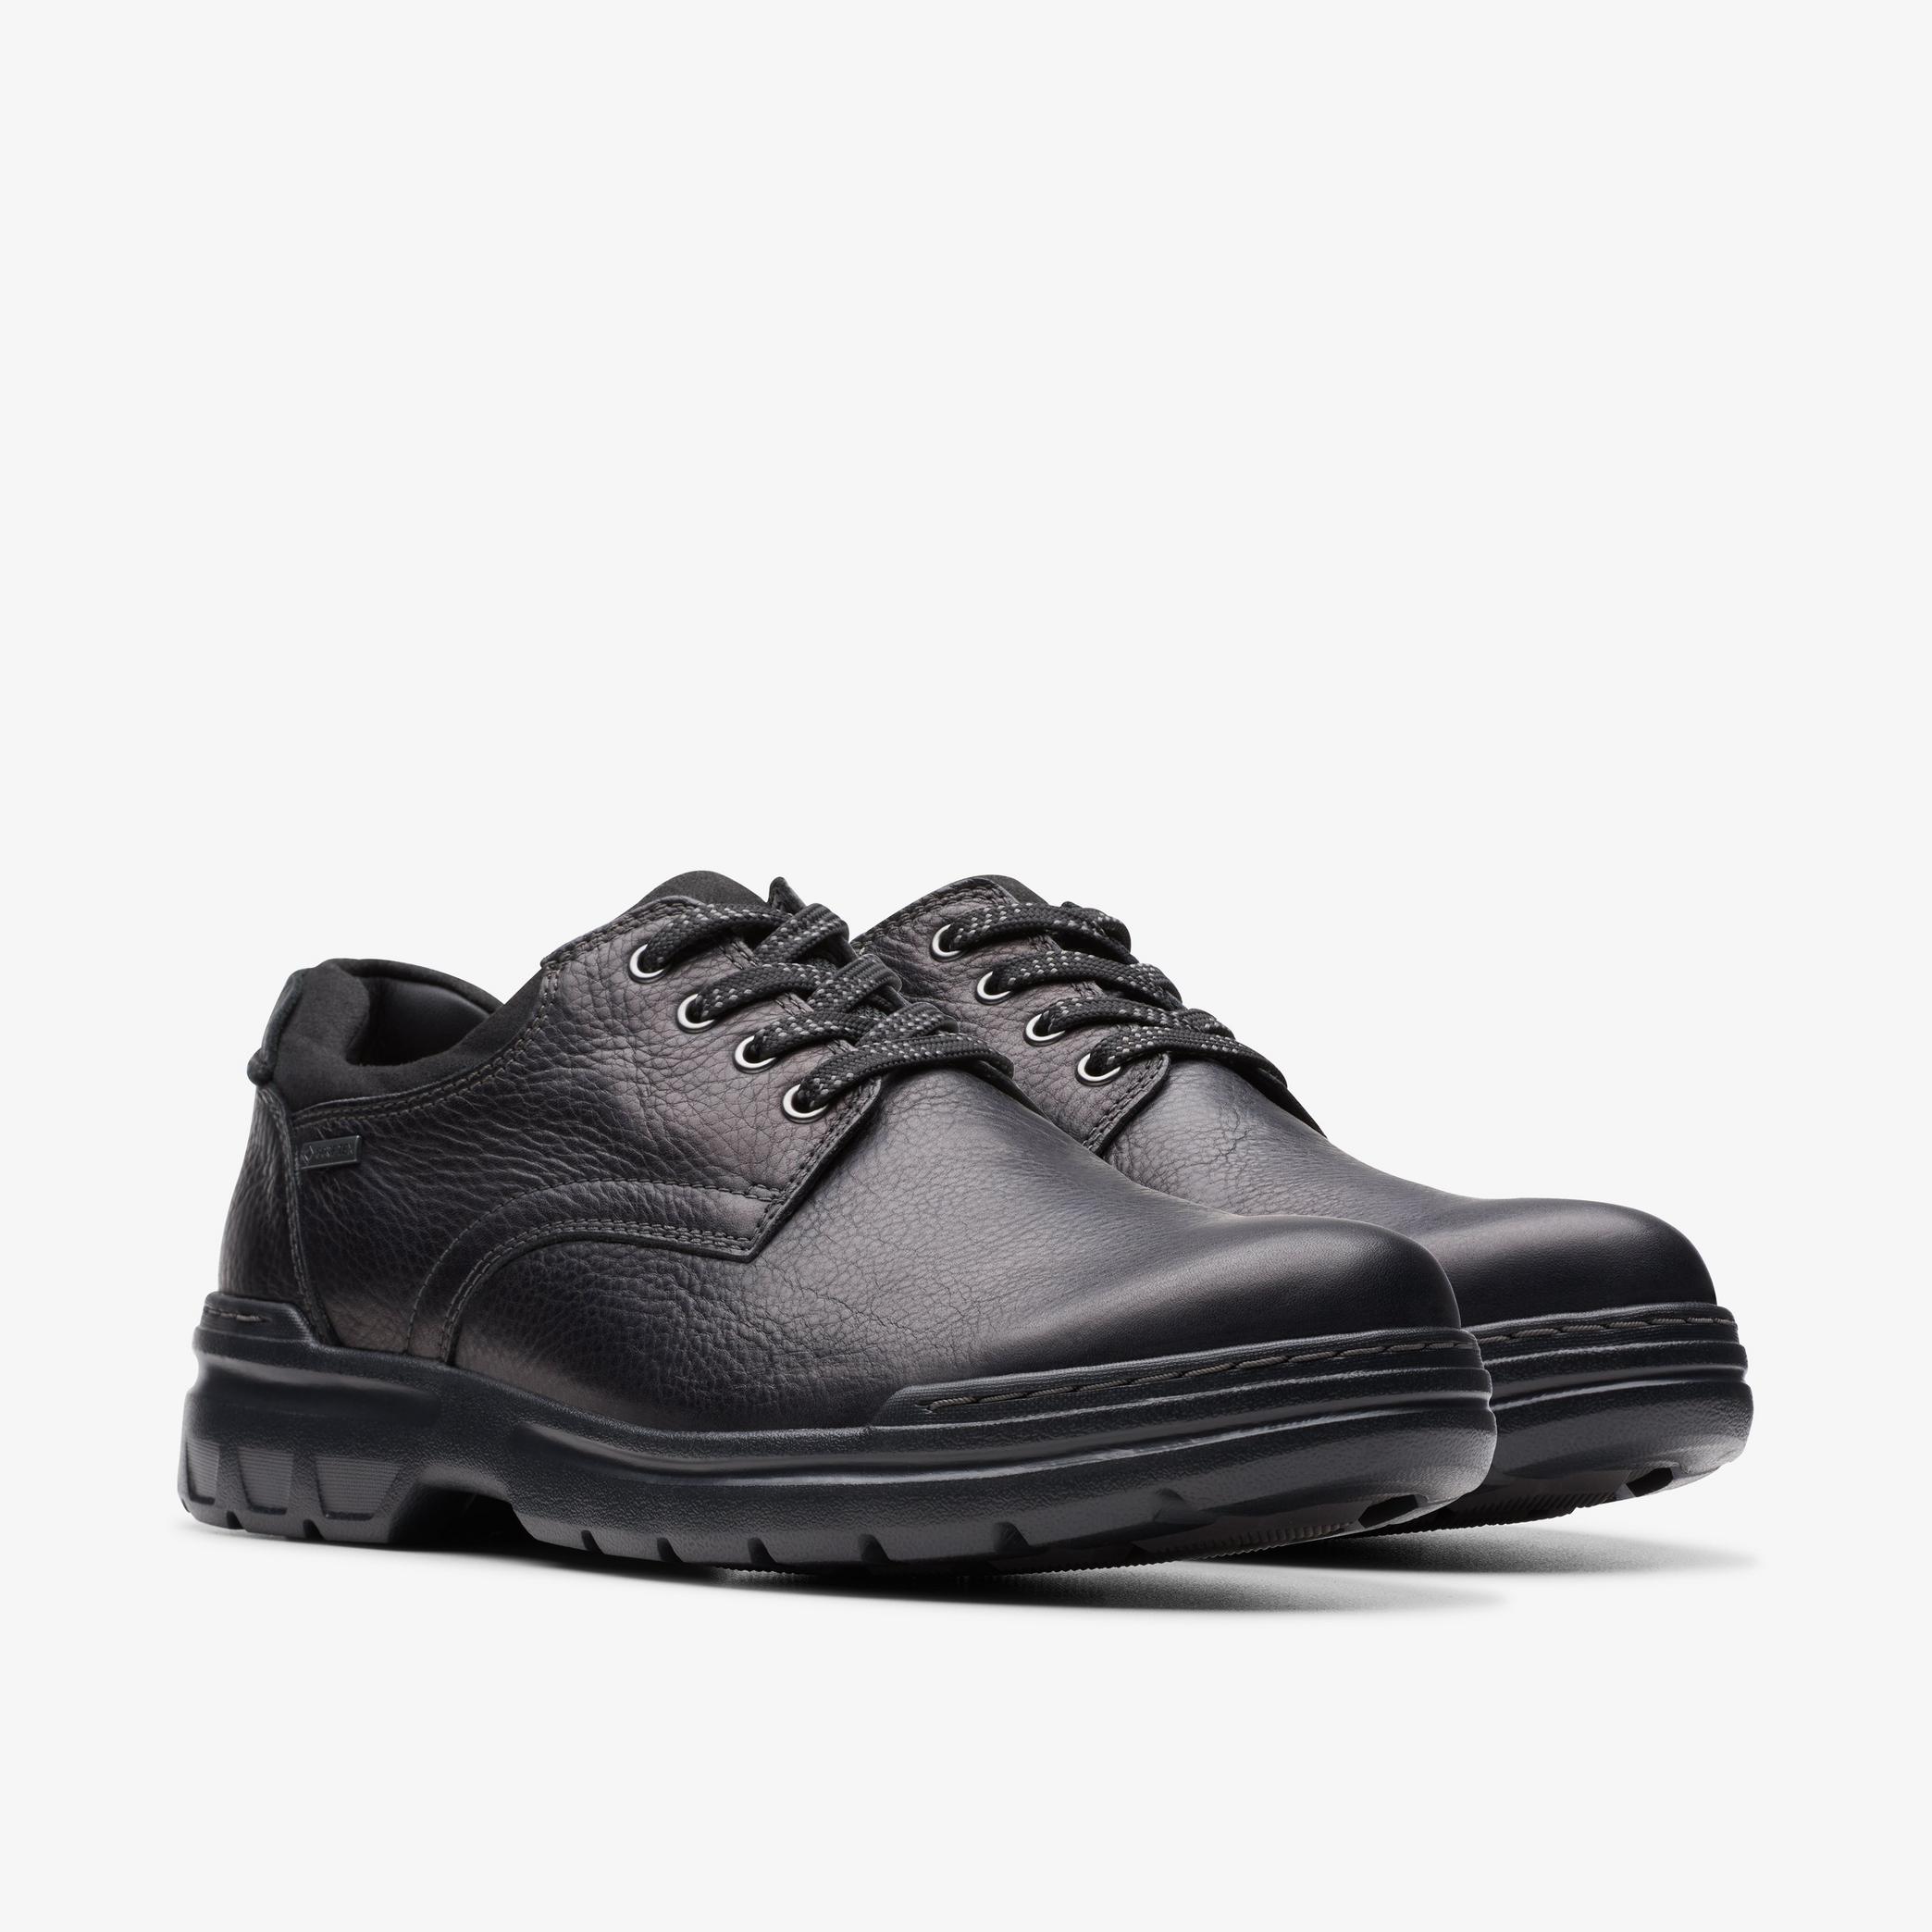 MENS Rockie Walk GORE-TEX Black Leather Derby Shoes | Clarks UK